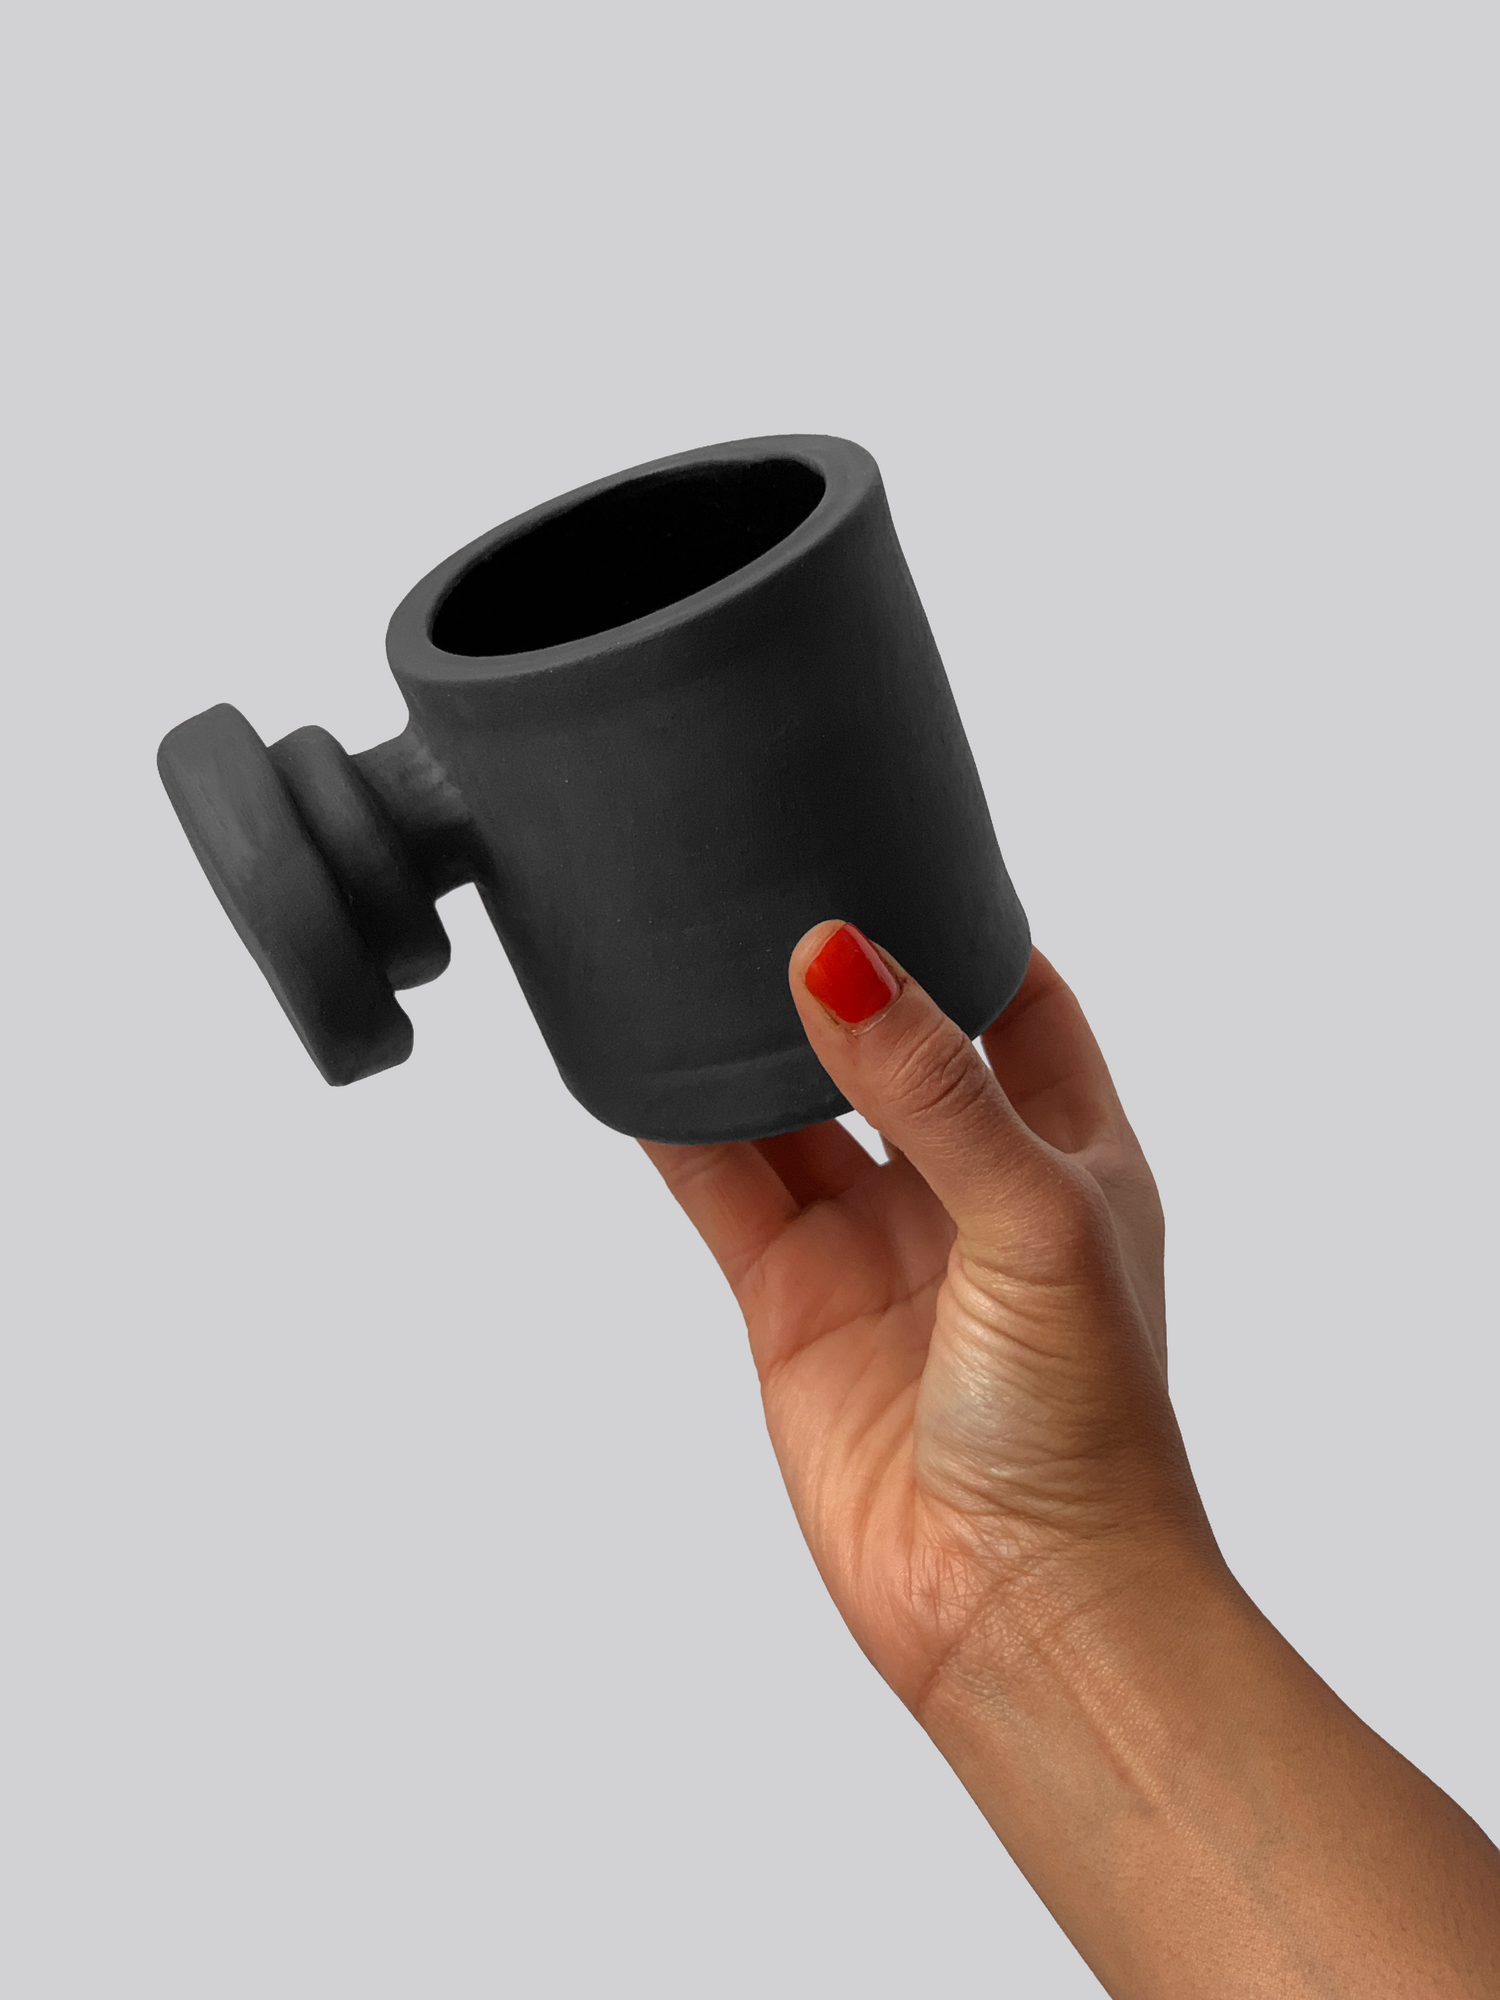 Black matte stoneware ceramic mug with a layered circular knob handle.